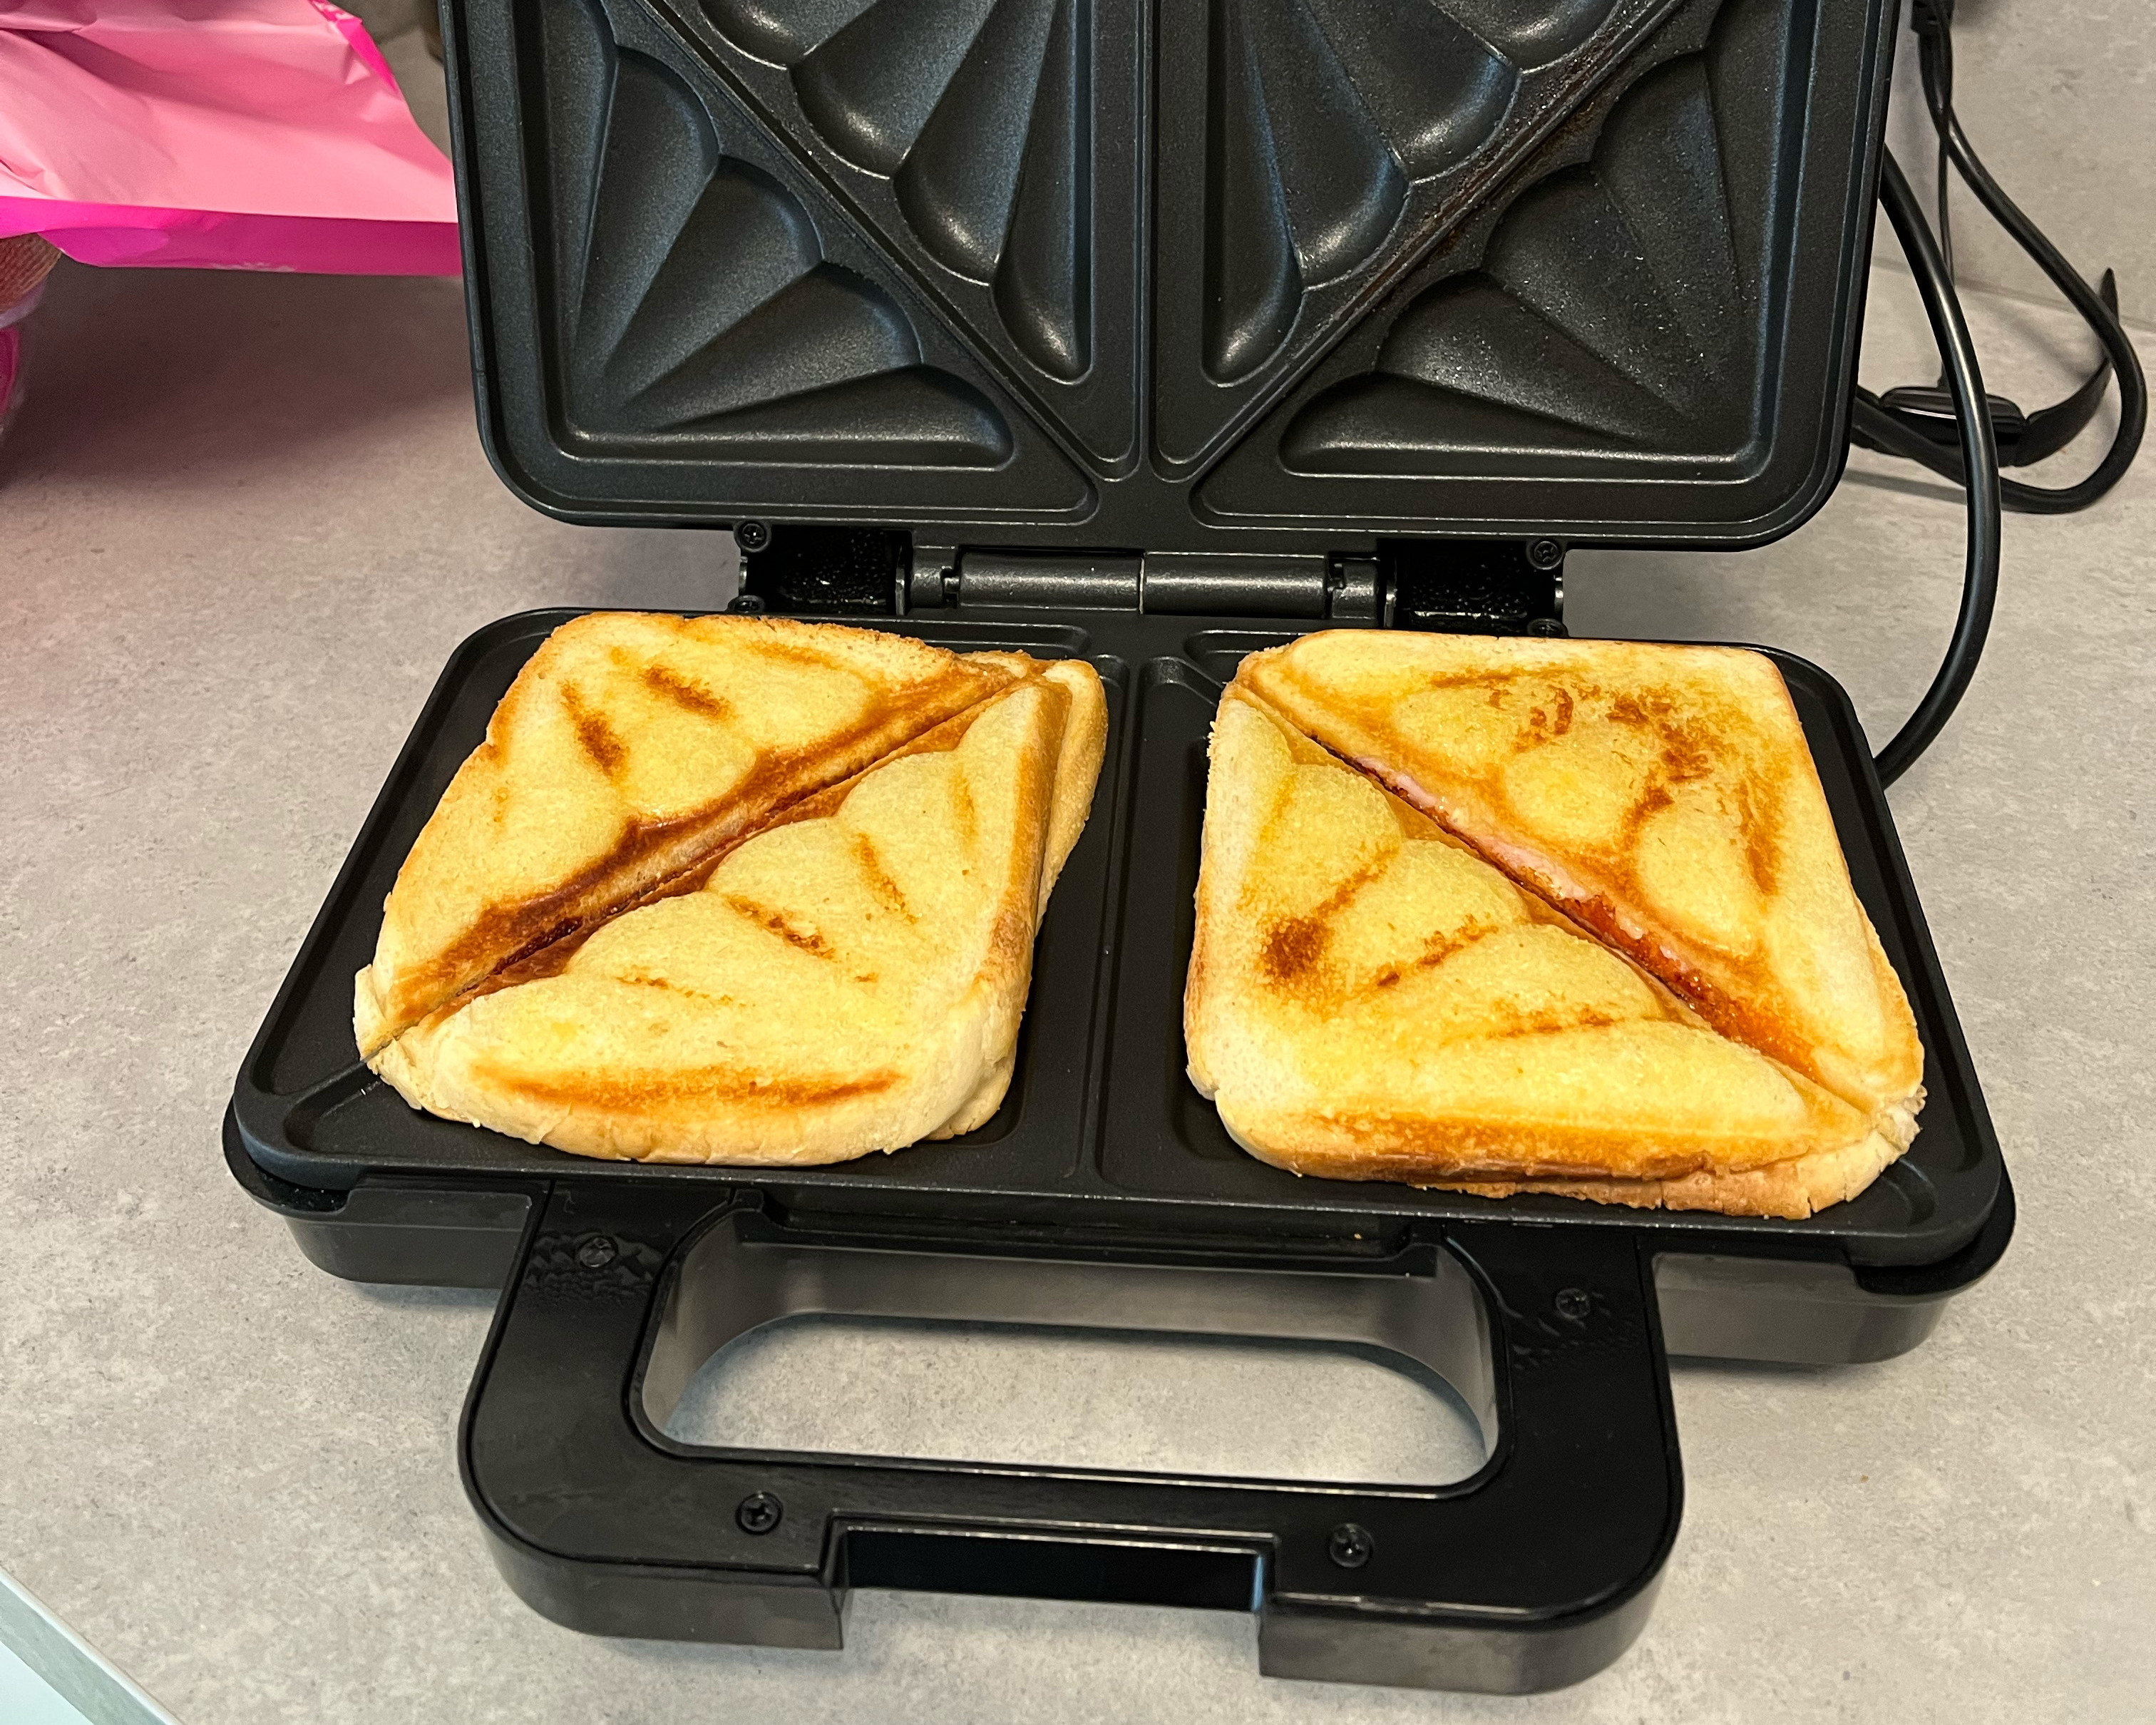 Tower Sandwich Toaster